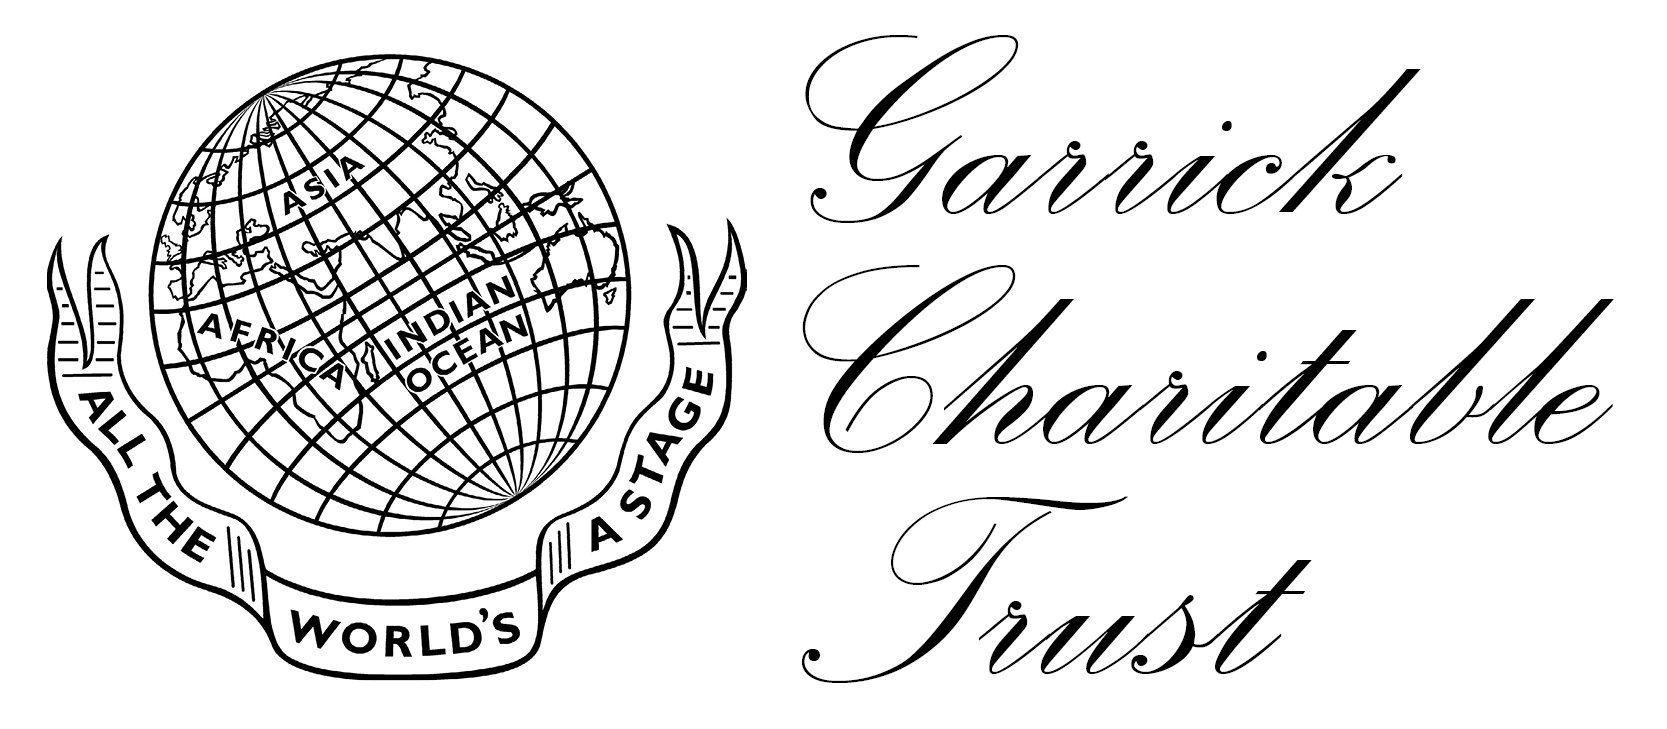 Garrick Charitable Trust logo.jpeg